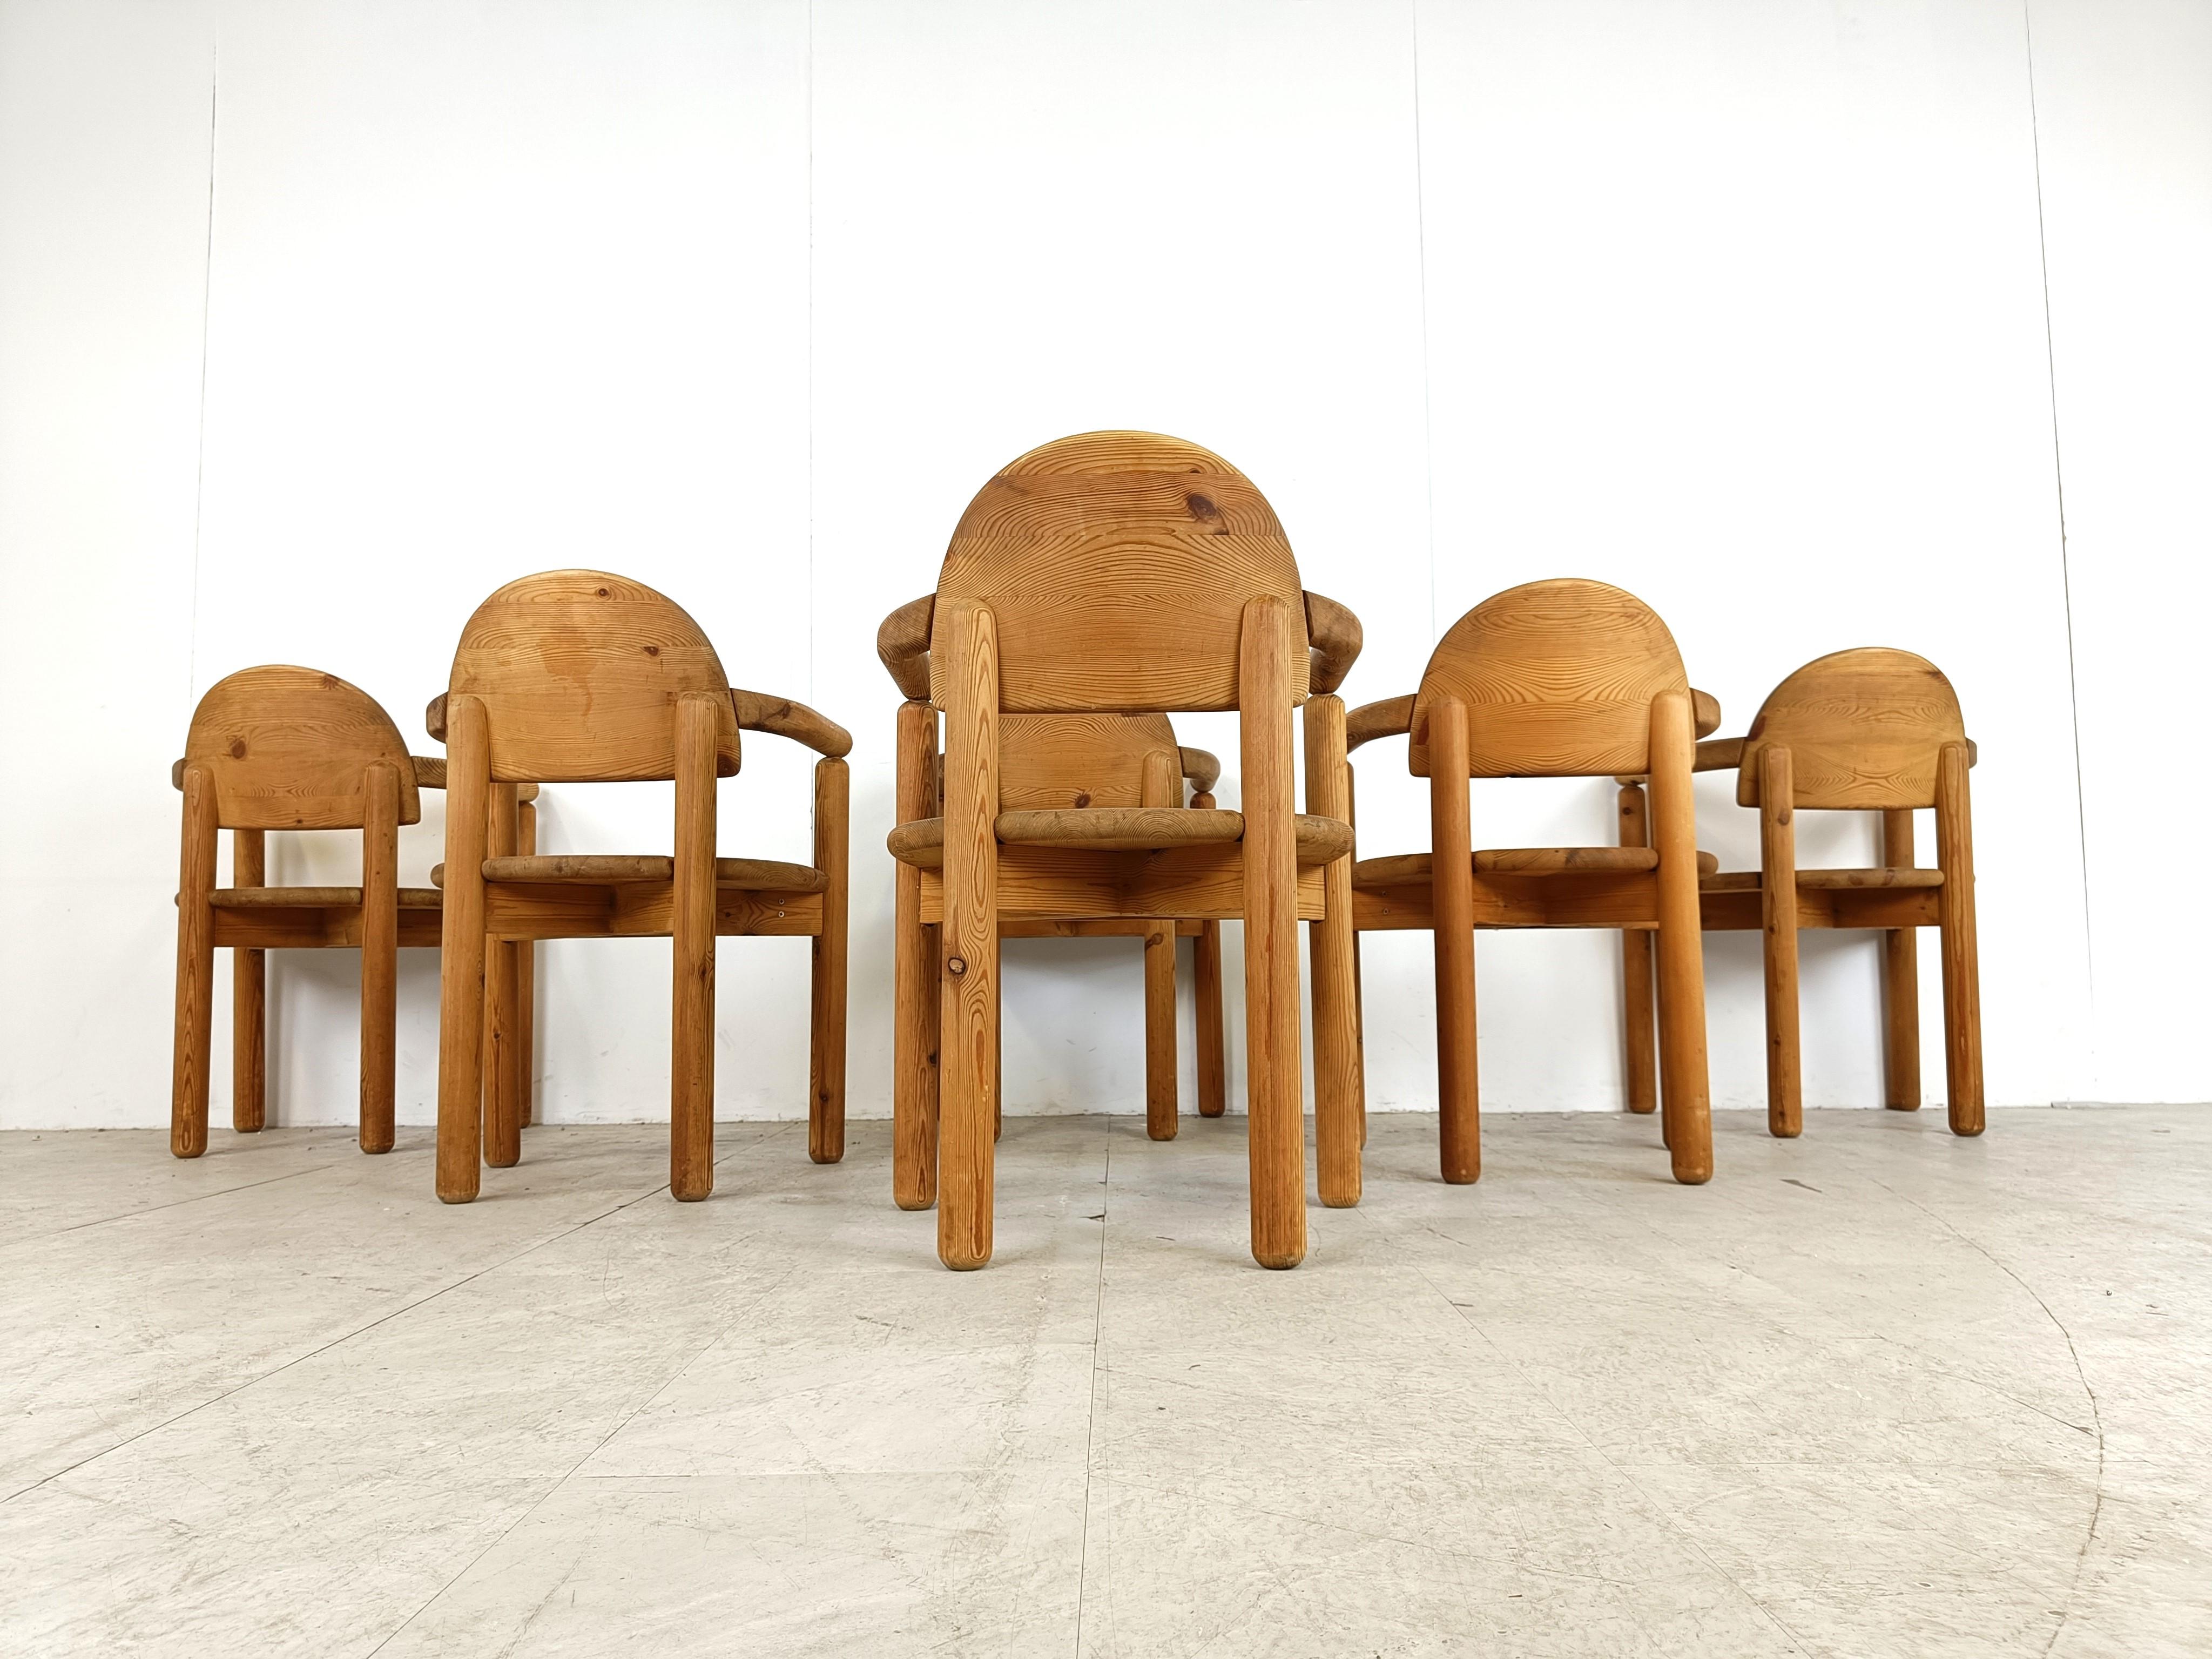 Pine Rainer Daumiller pine wood dining chairs for Hirtshals Savvaerk set of 6, 1980s